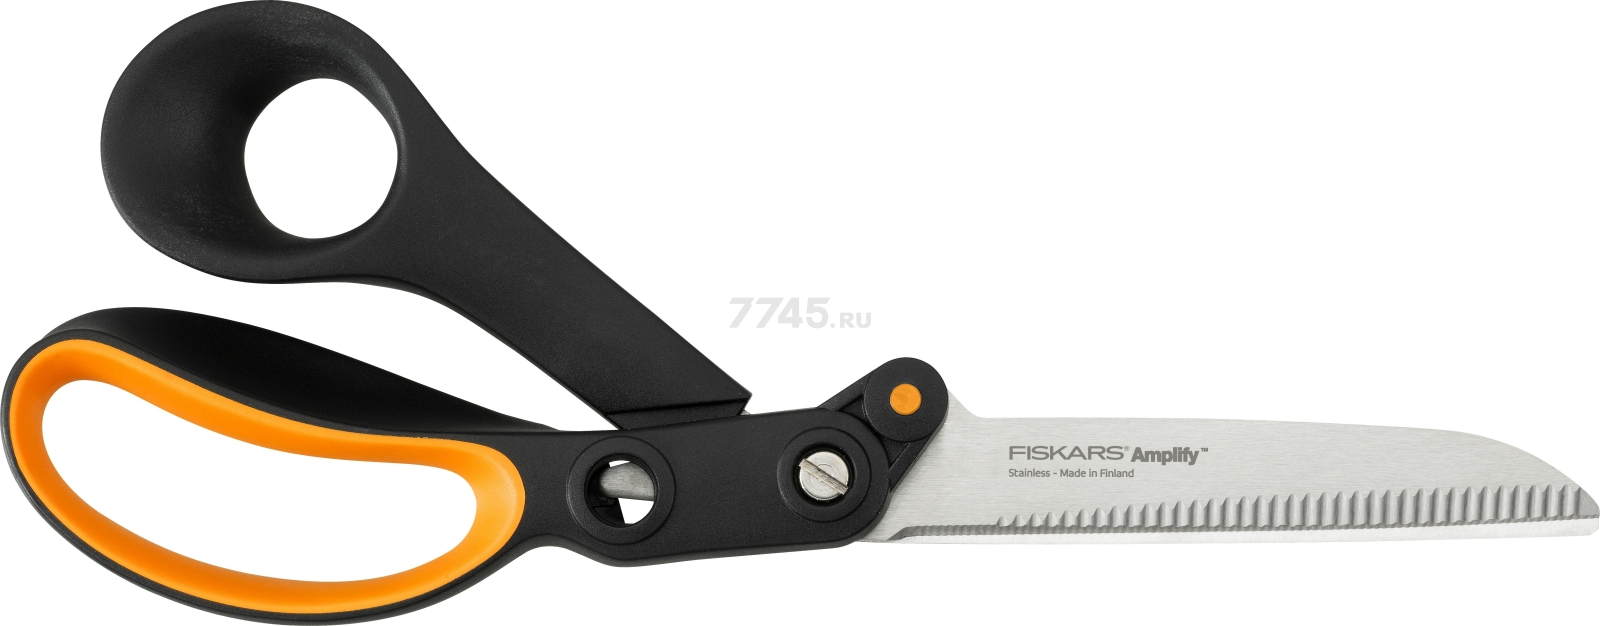 Ножницы для толстых материалов 249 мм FISKARS Amplify (1020223)